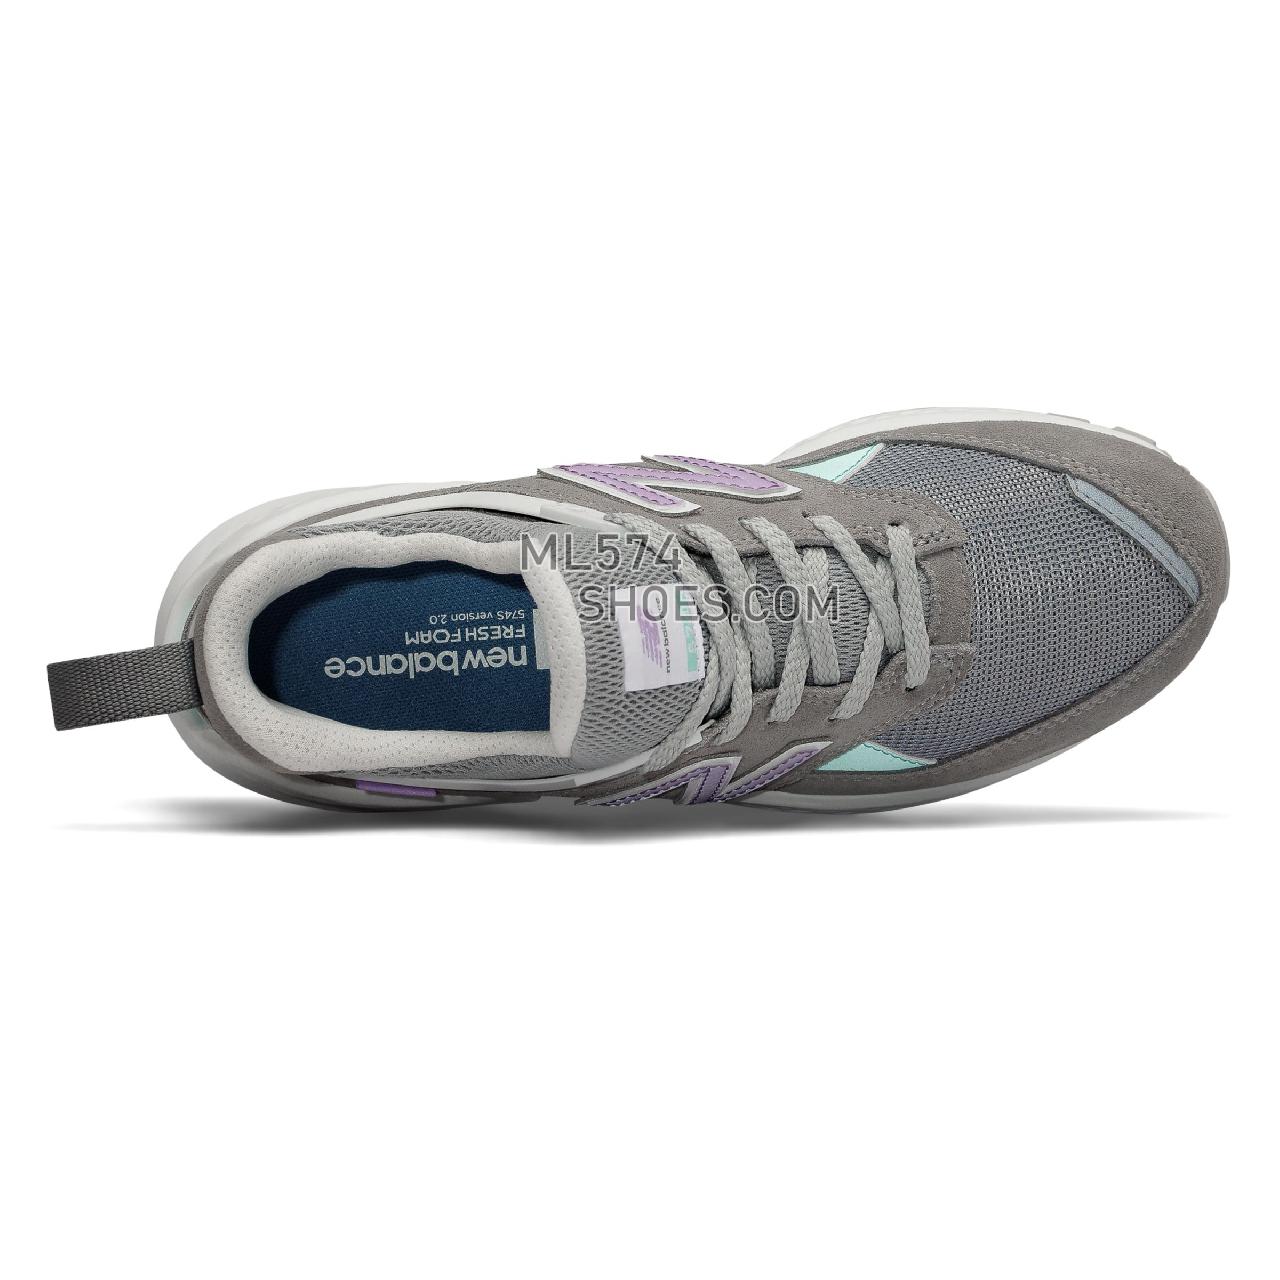 New Balance 574 Sport - Women's Sport Style Sneakers - Gunmetal with Dark Violet Glo - WS574PRC